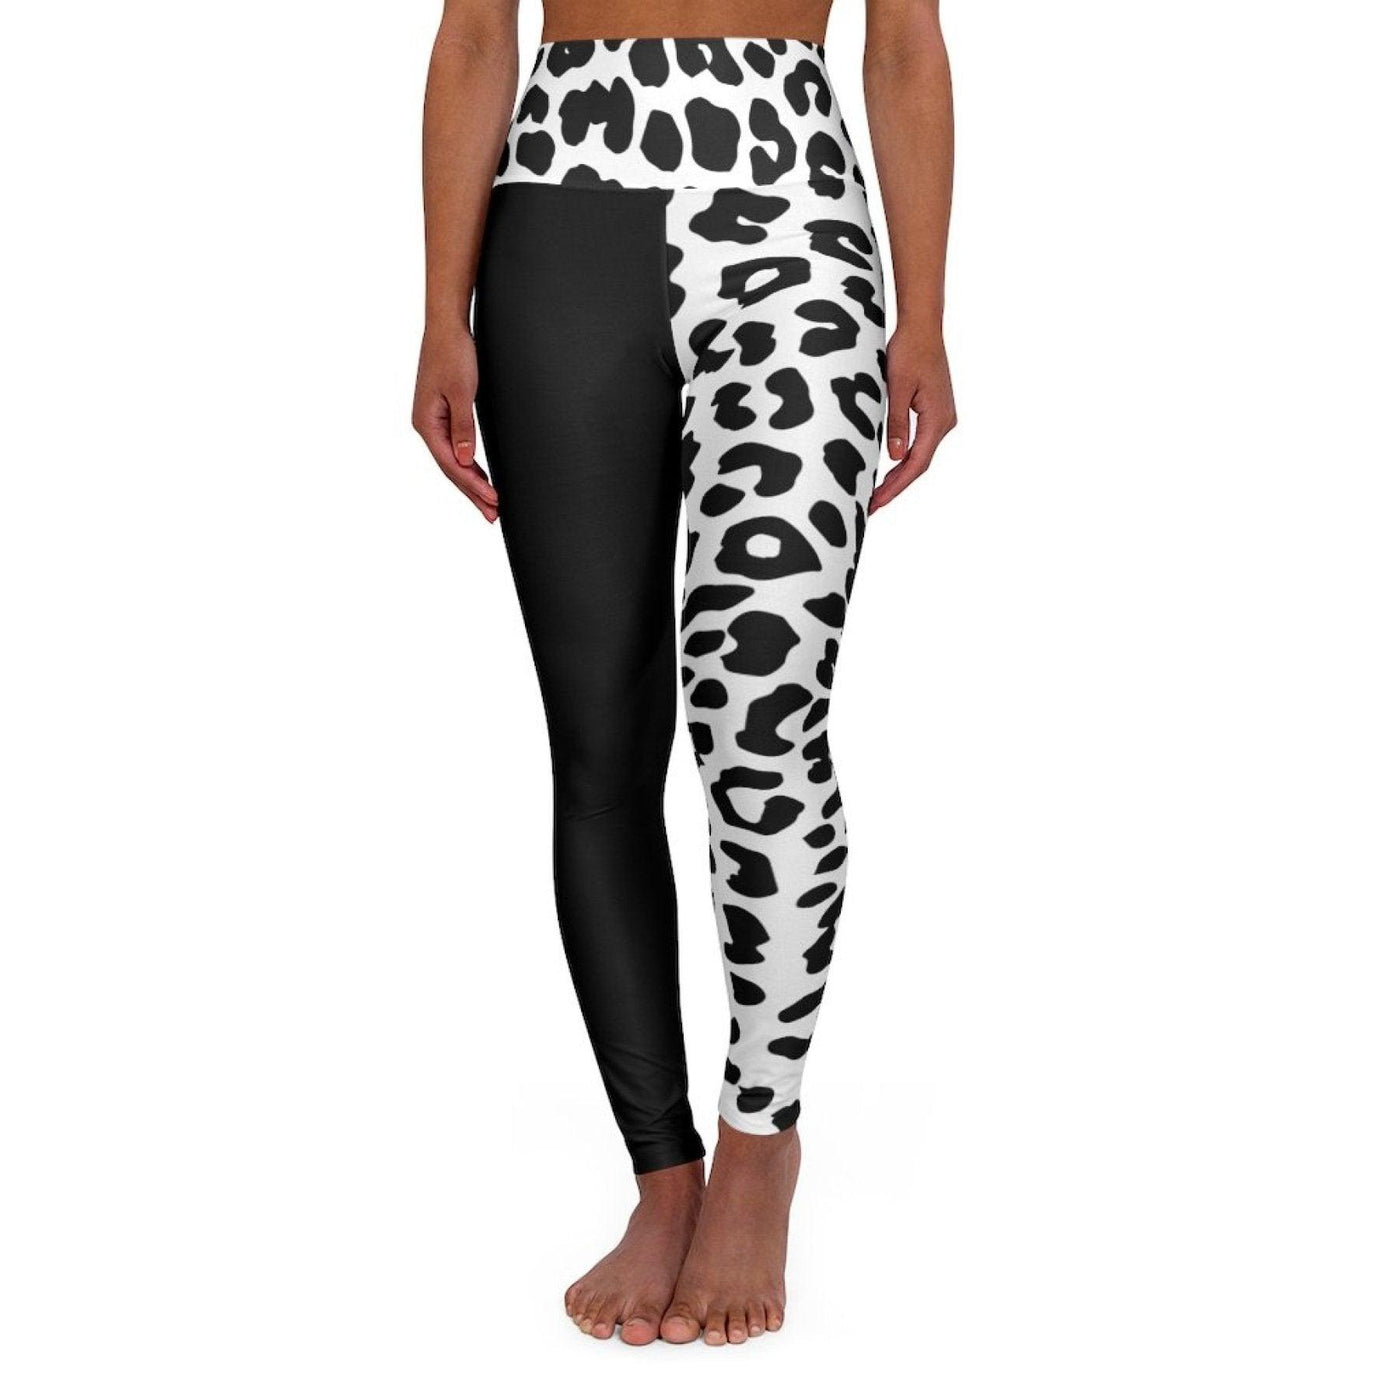 High Waisted Yoga Leggings, Black And White Half-Tone Leopard Style Pants - fashion$ense-6263